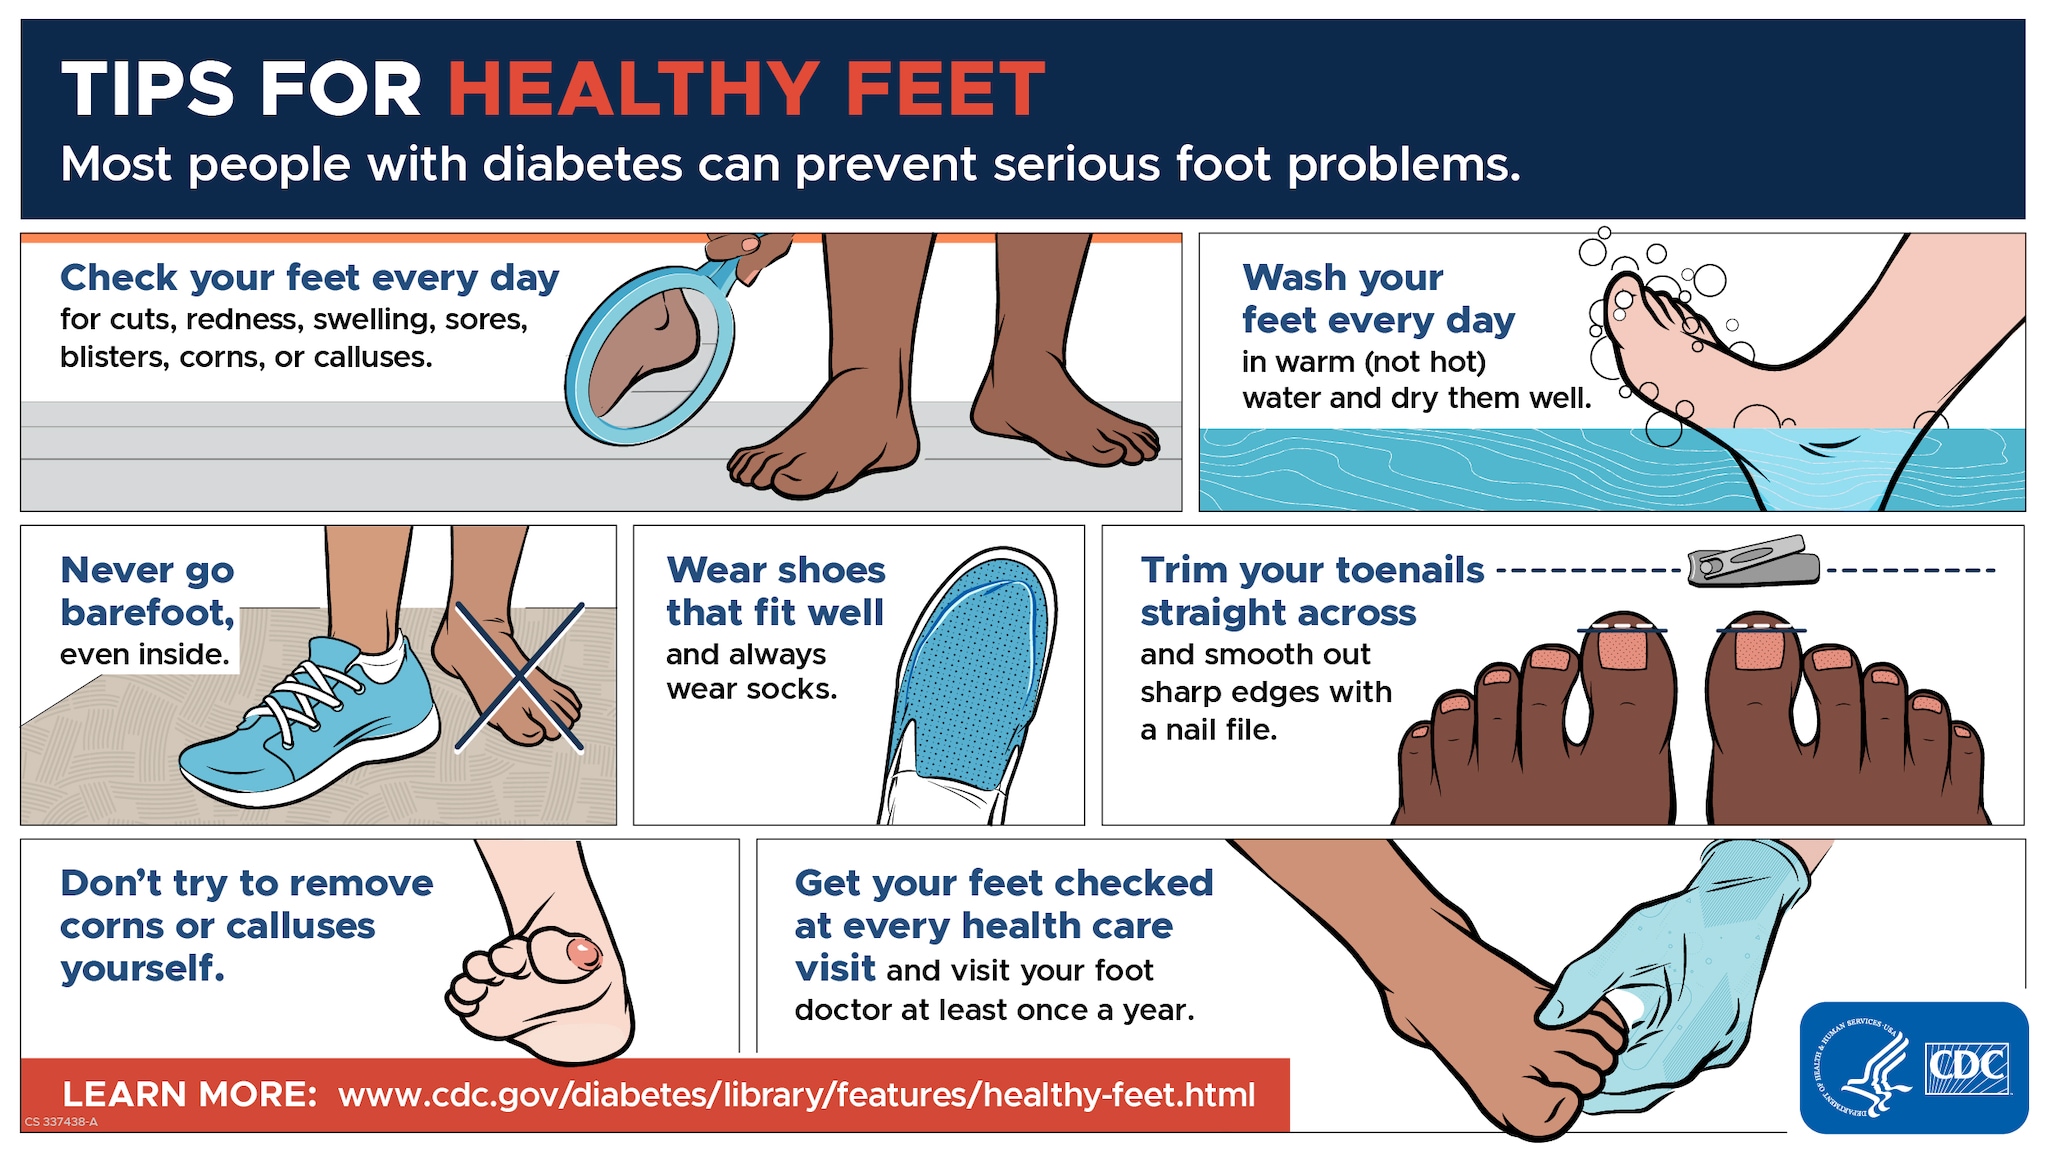 Diabetic foot care tips